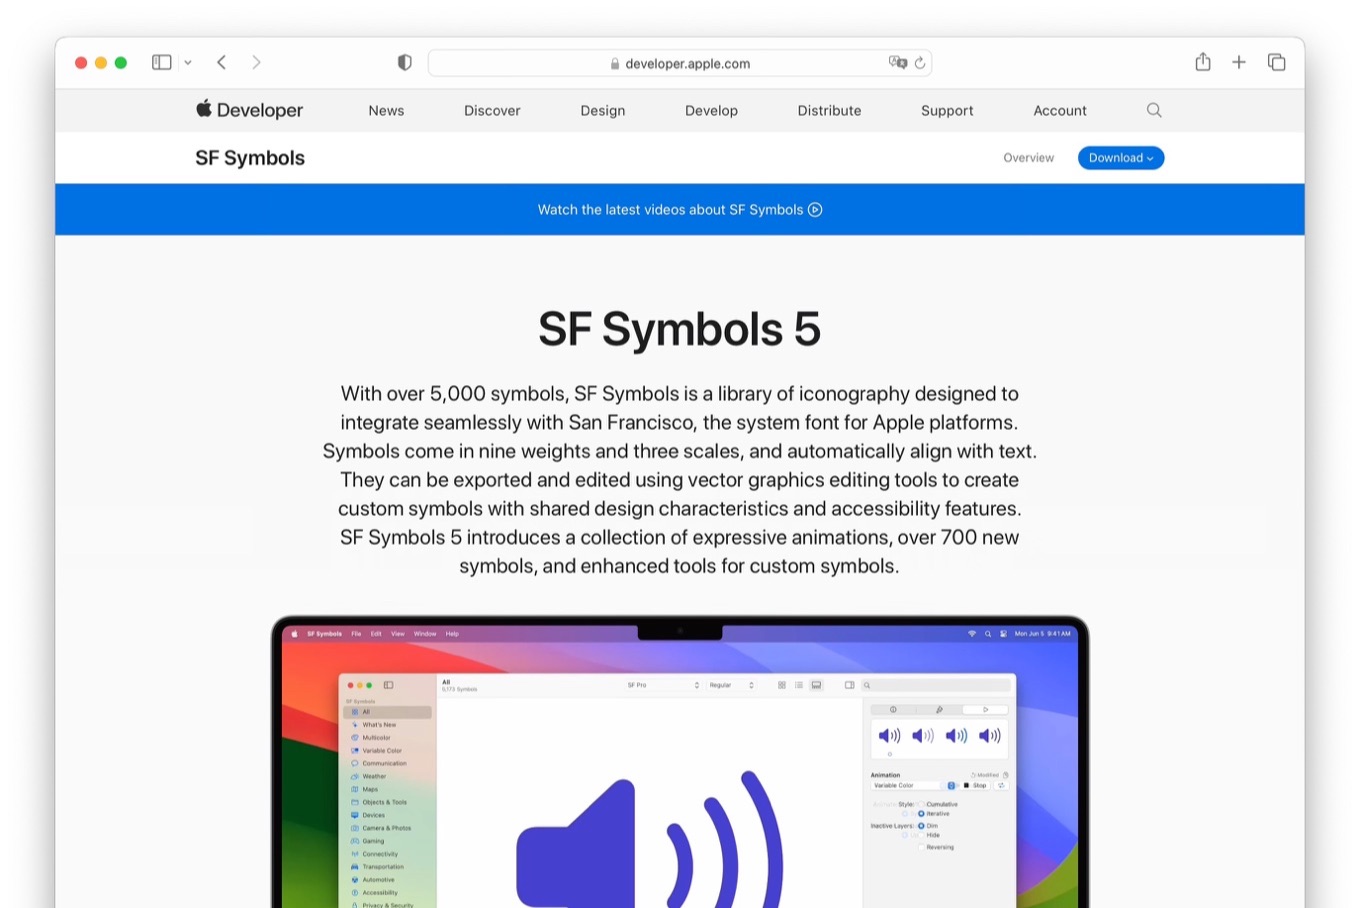 SF Symbols v5 Beta now available